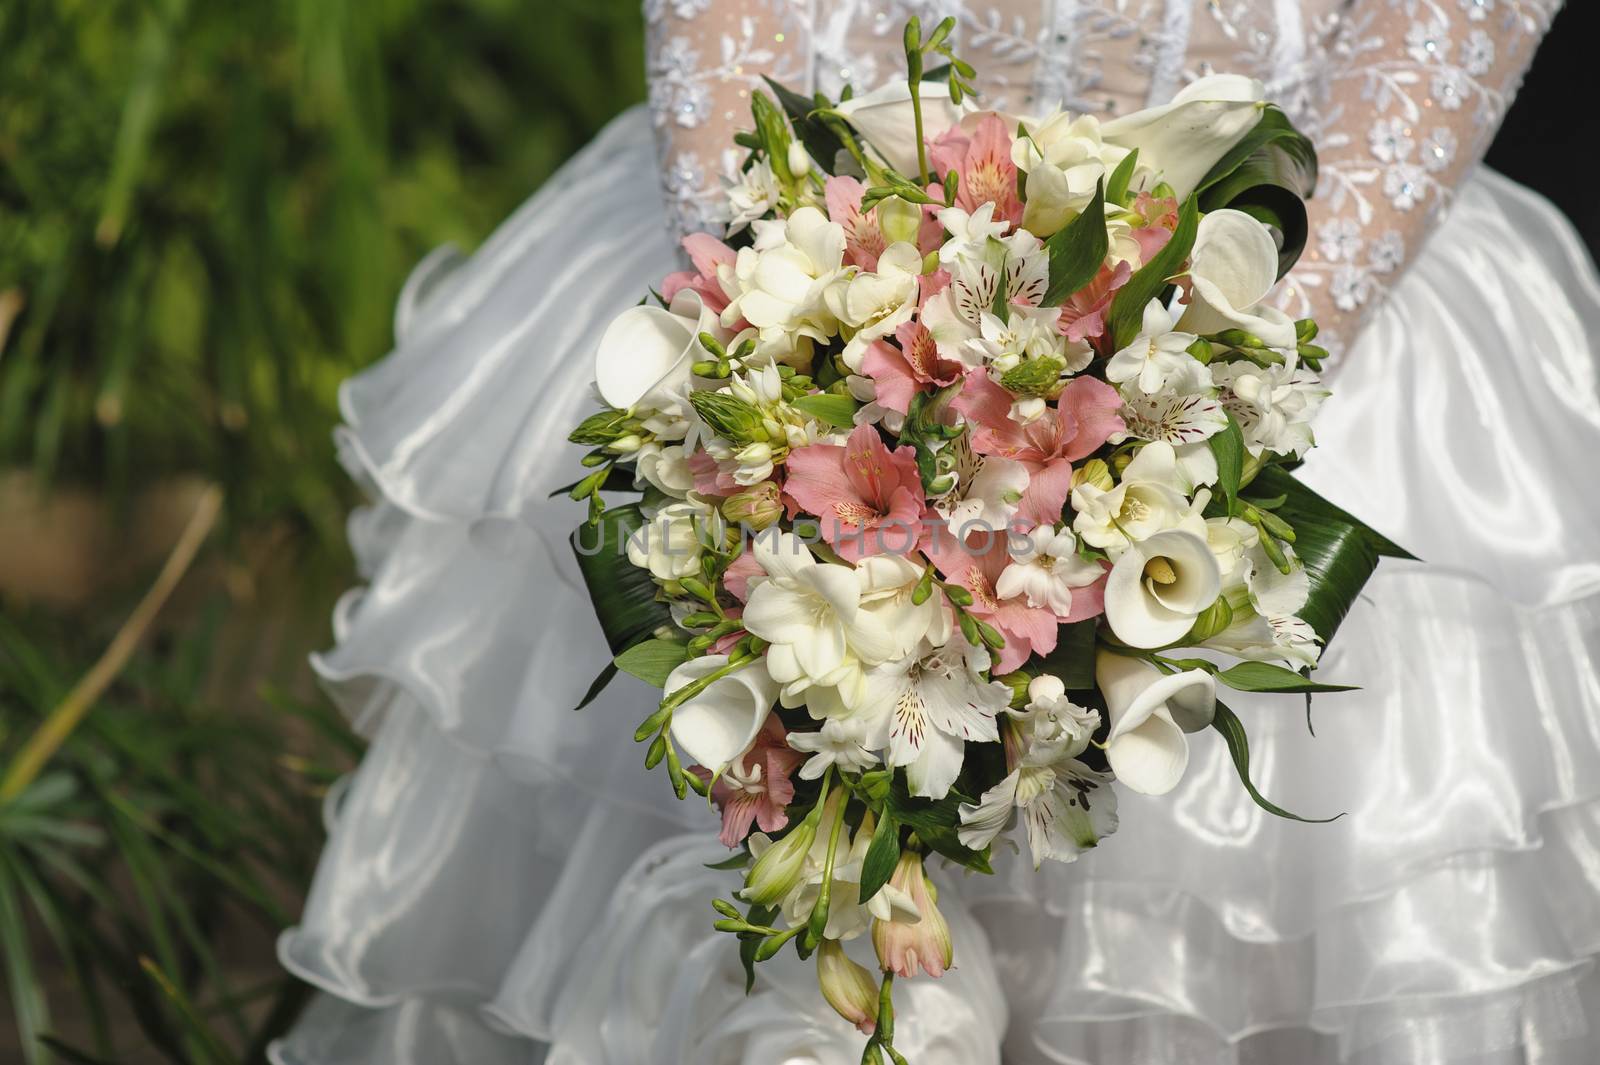 Bride holding white wedding bouquet by timonko